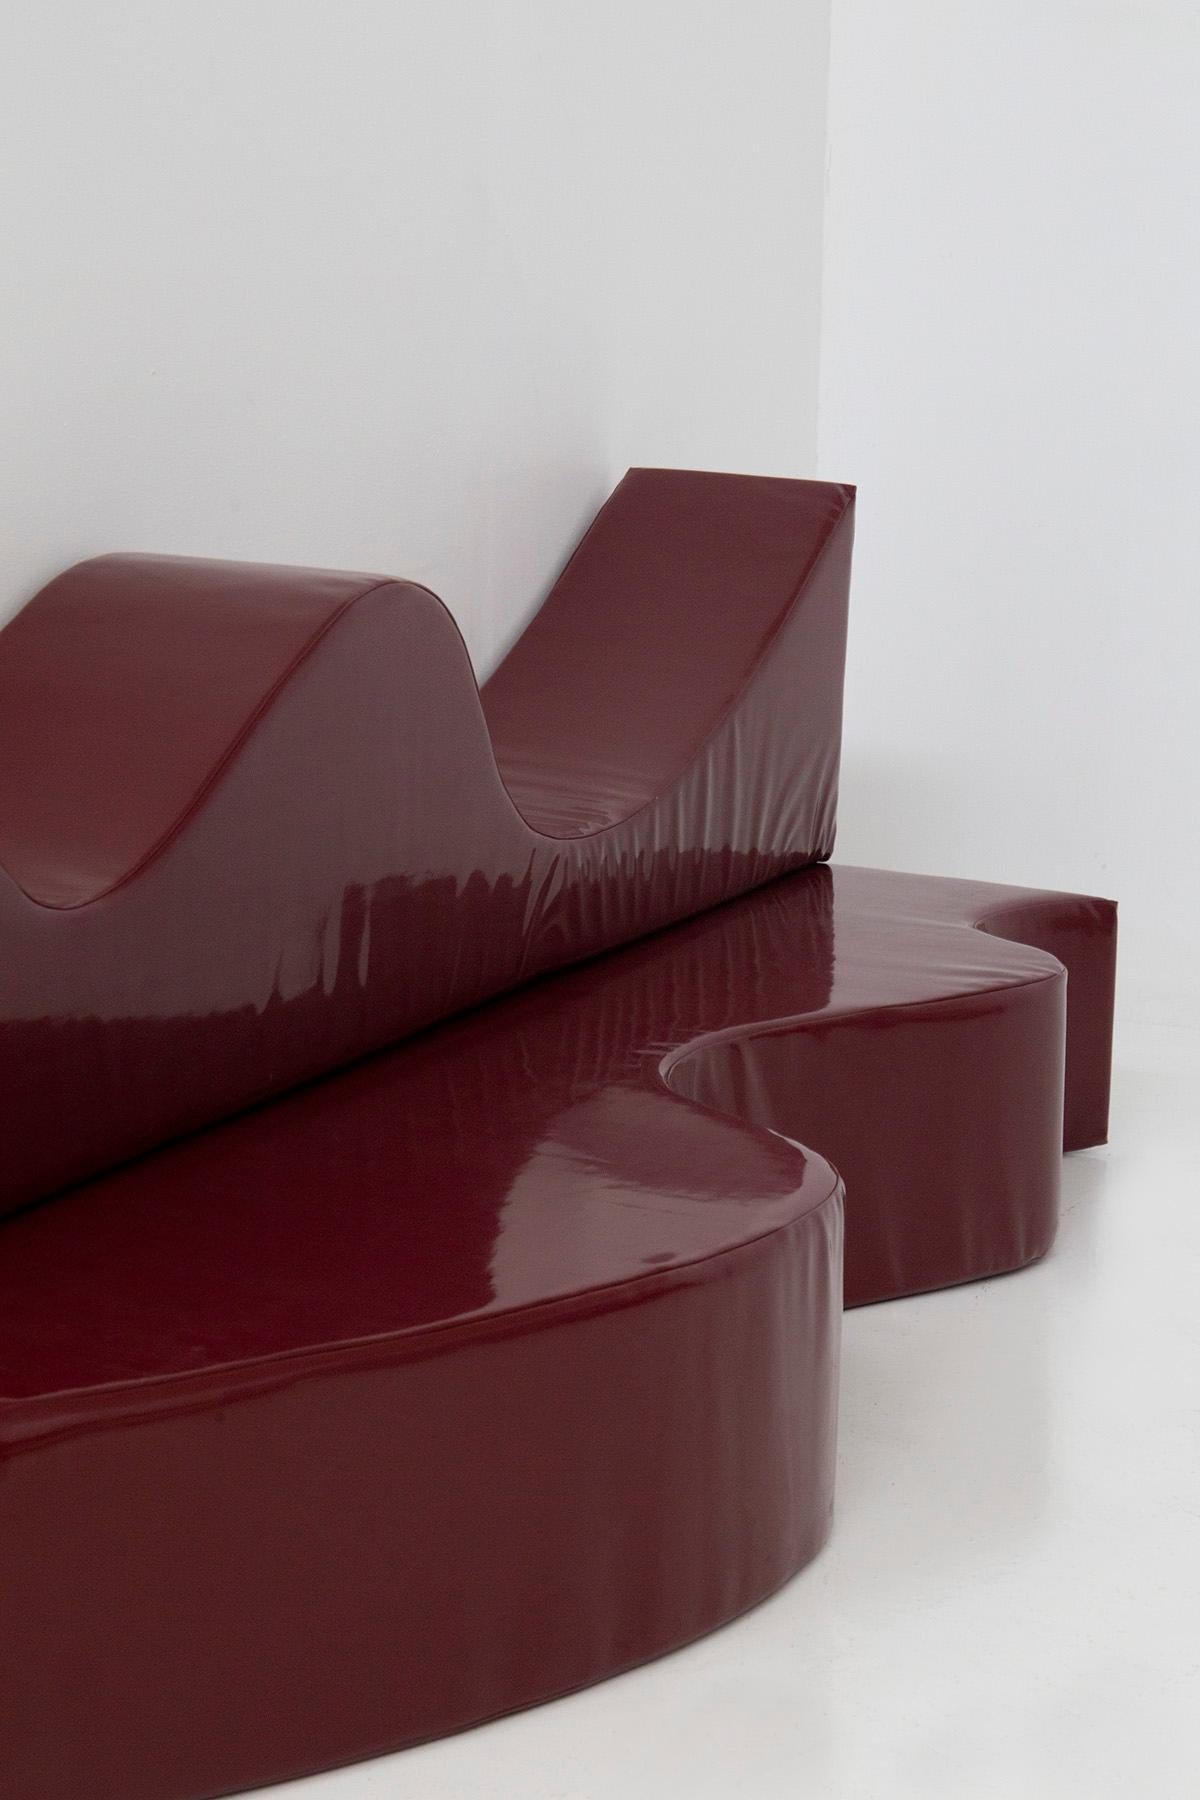 Superonda sofa Archizoom Poltronova in Vinyl Color amaranth 2